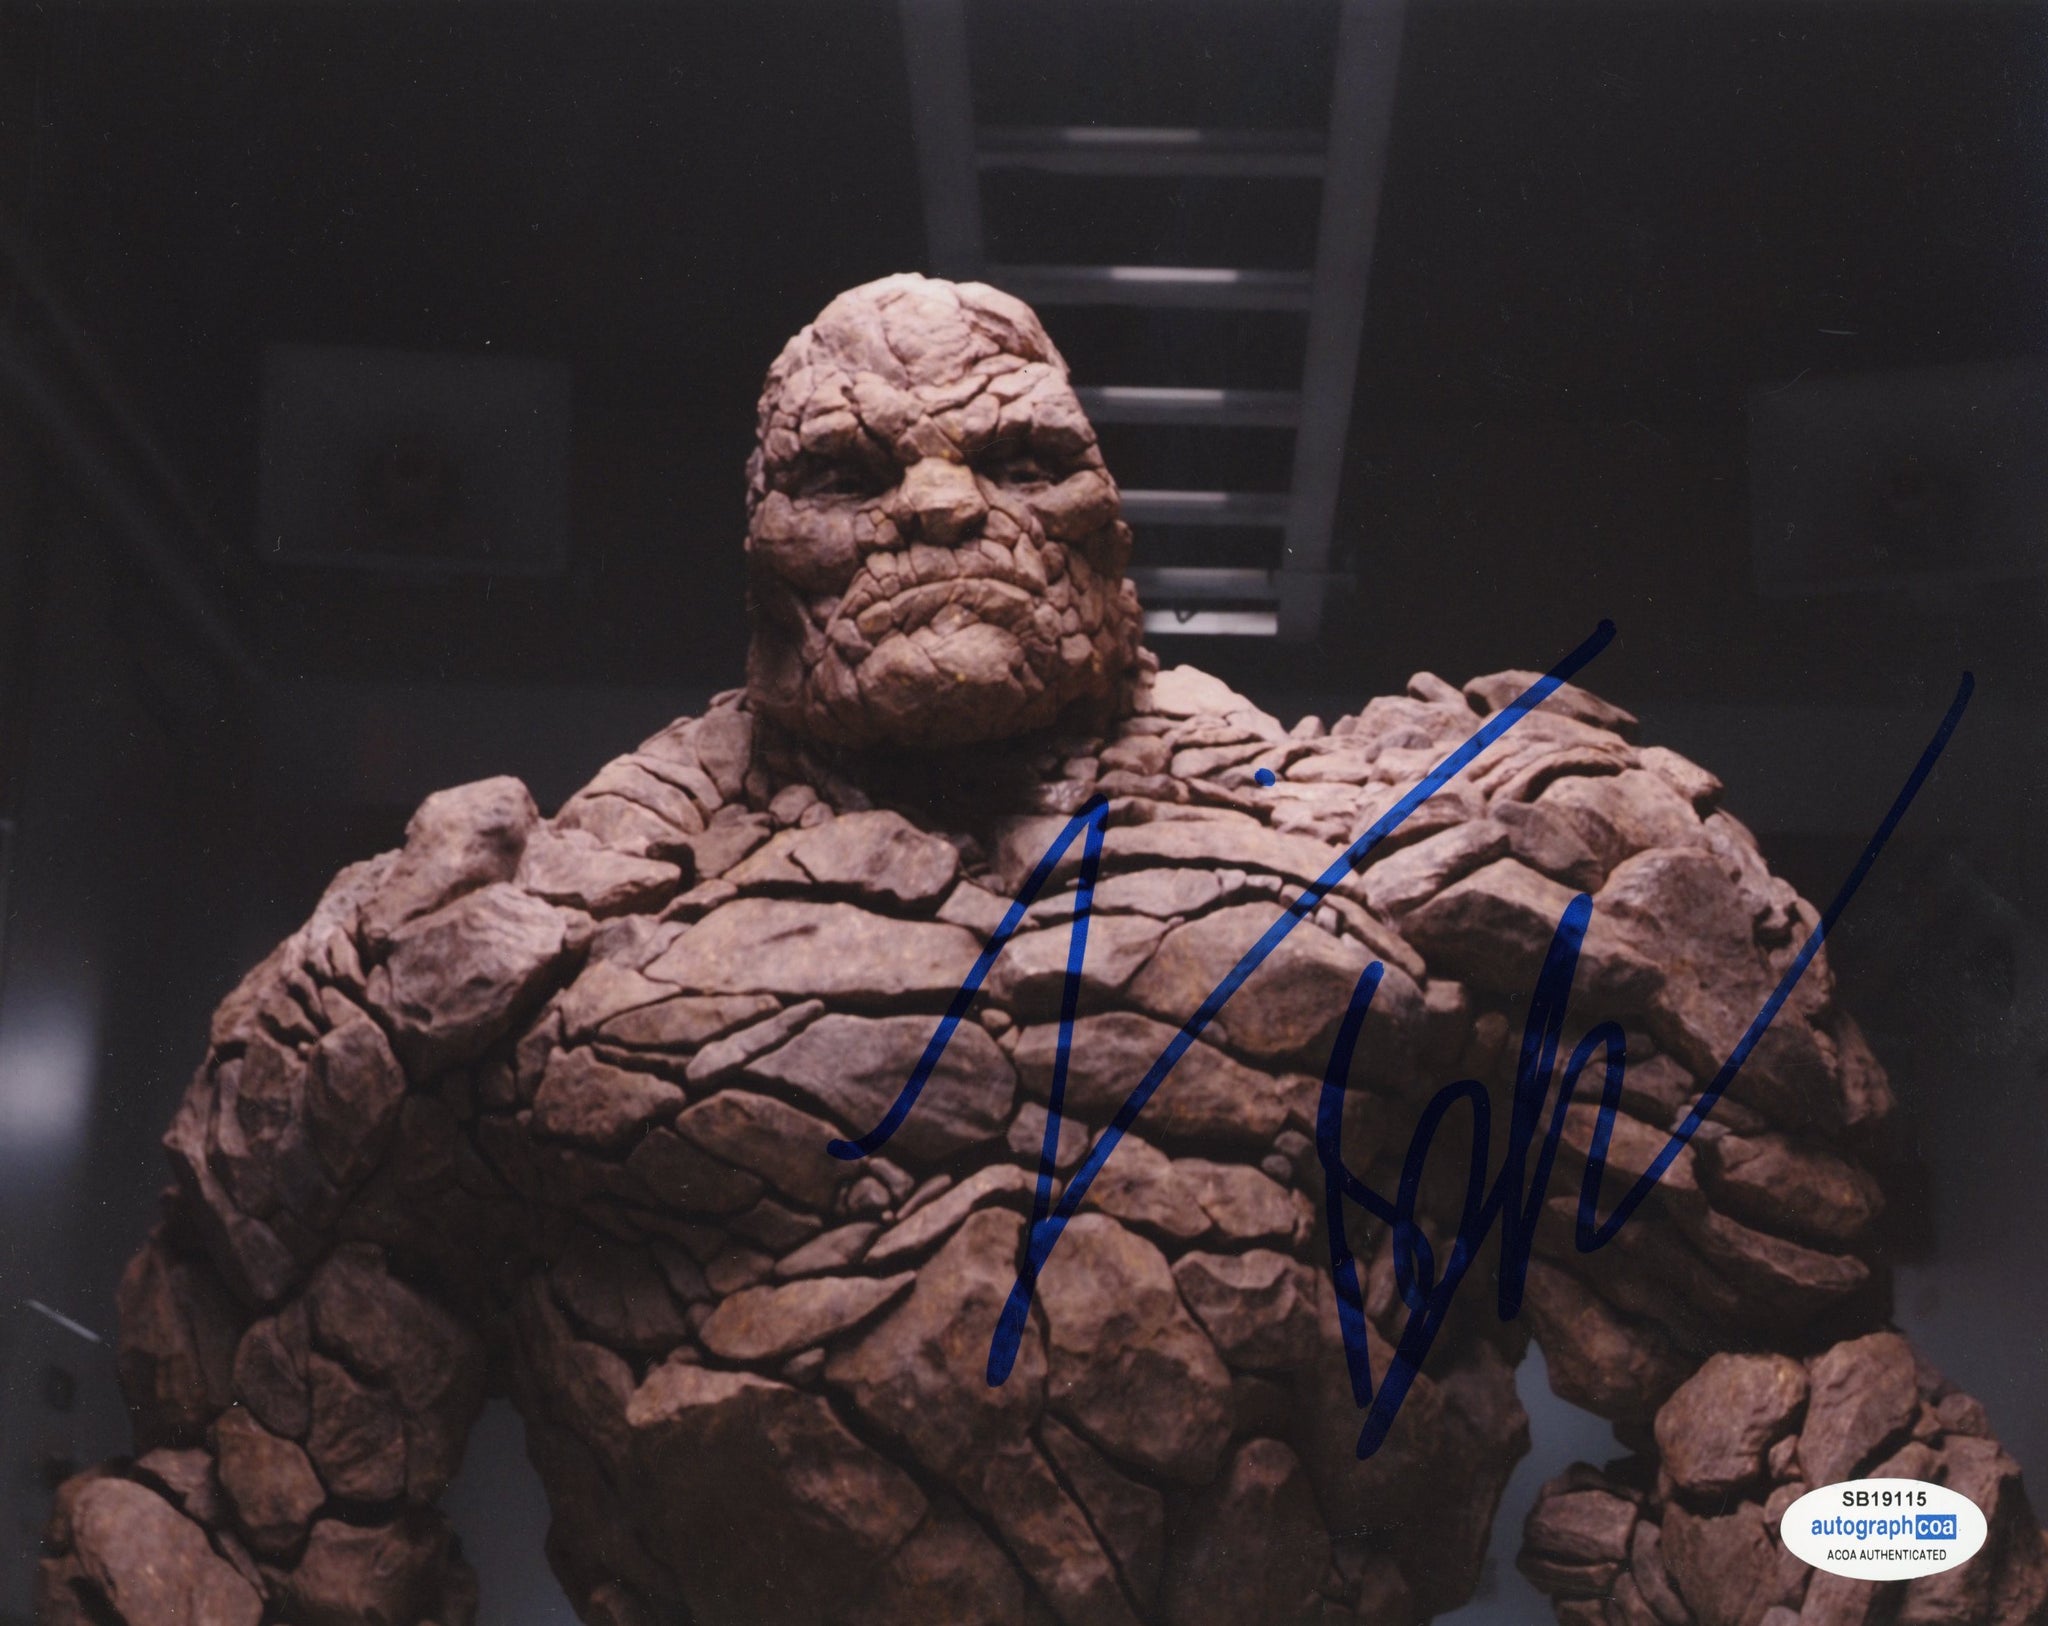 Jamie Bell Fantastic Four Signed Autograph 8x10 Photo ACOA